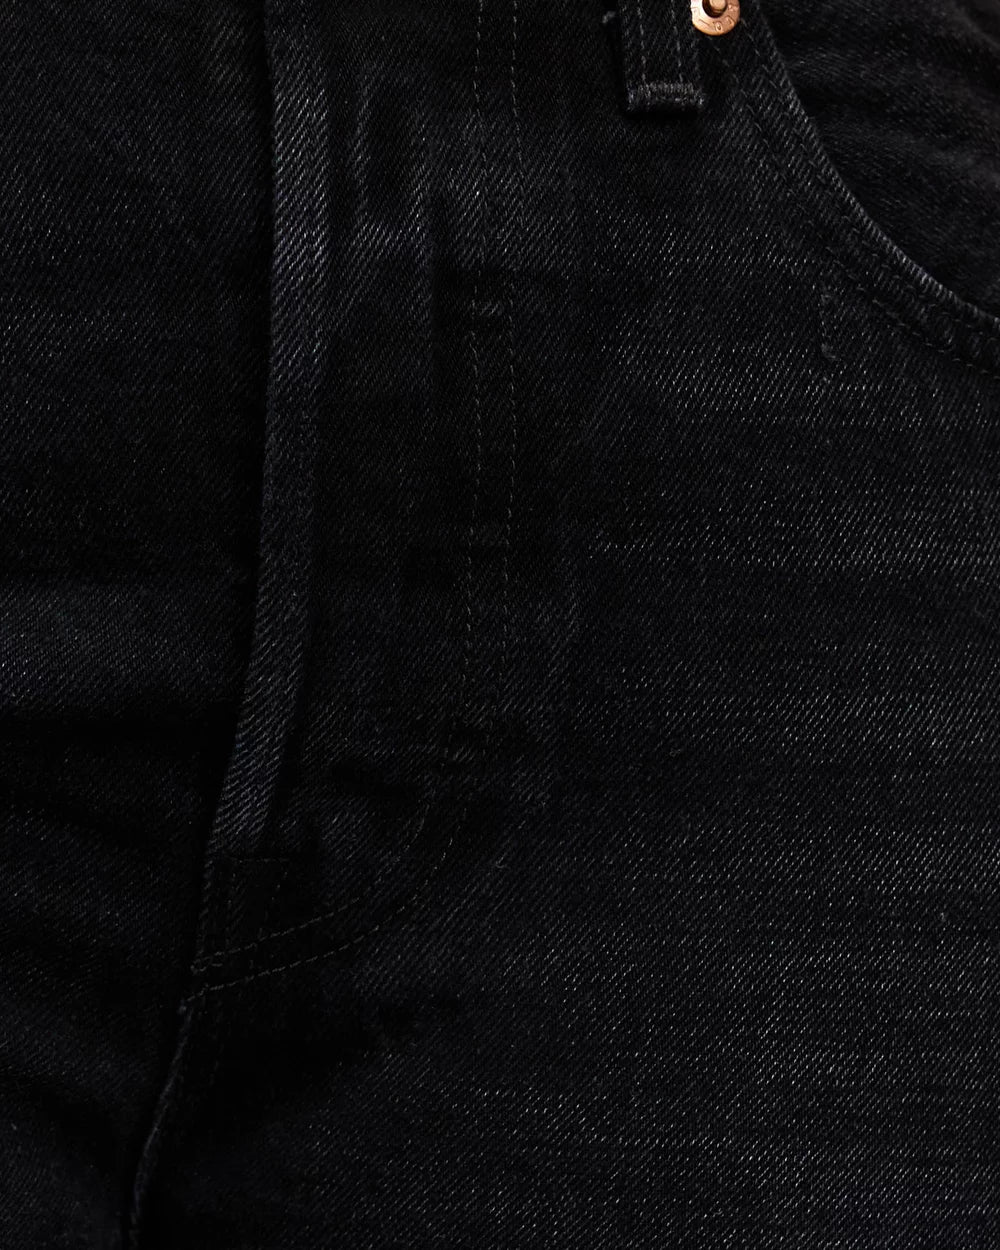 501 Jeans - Black Worn